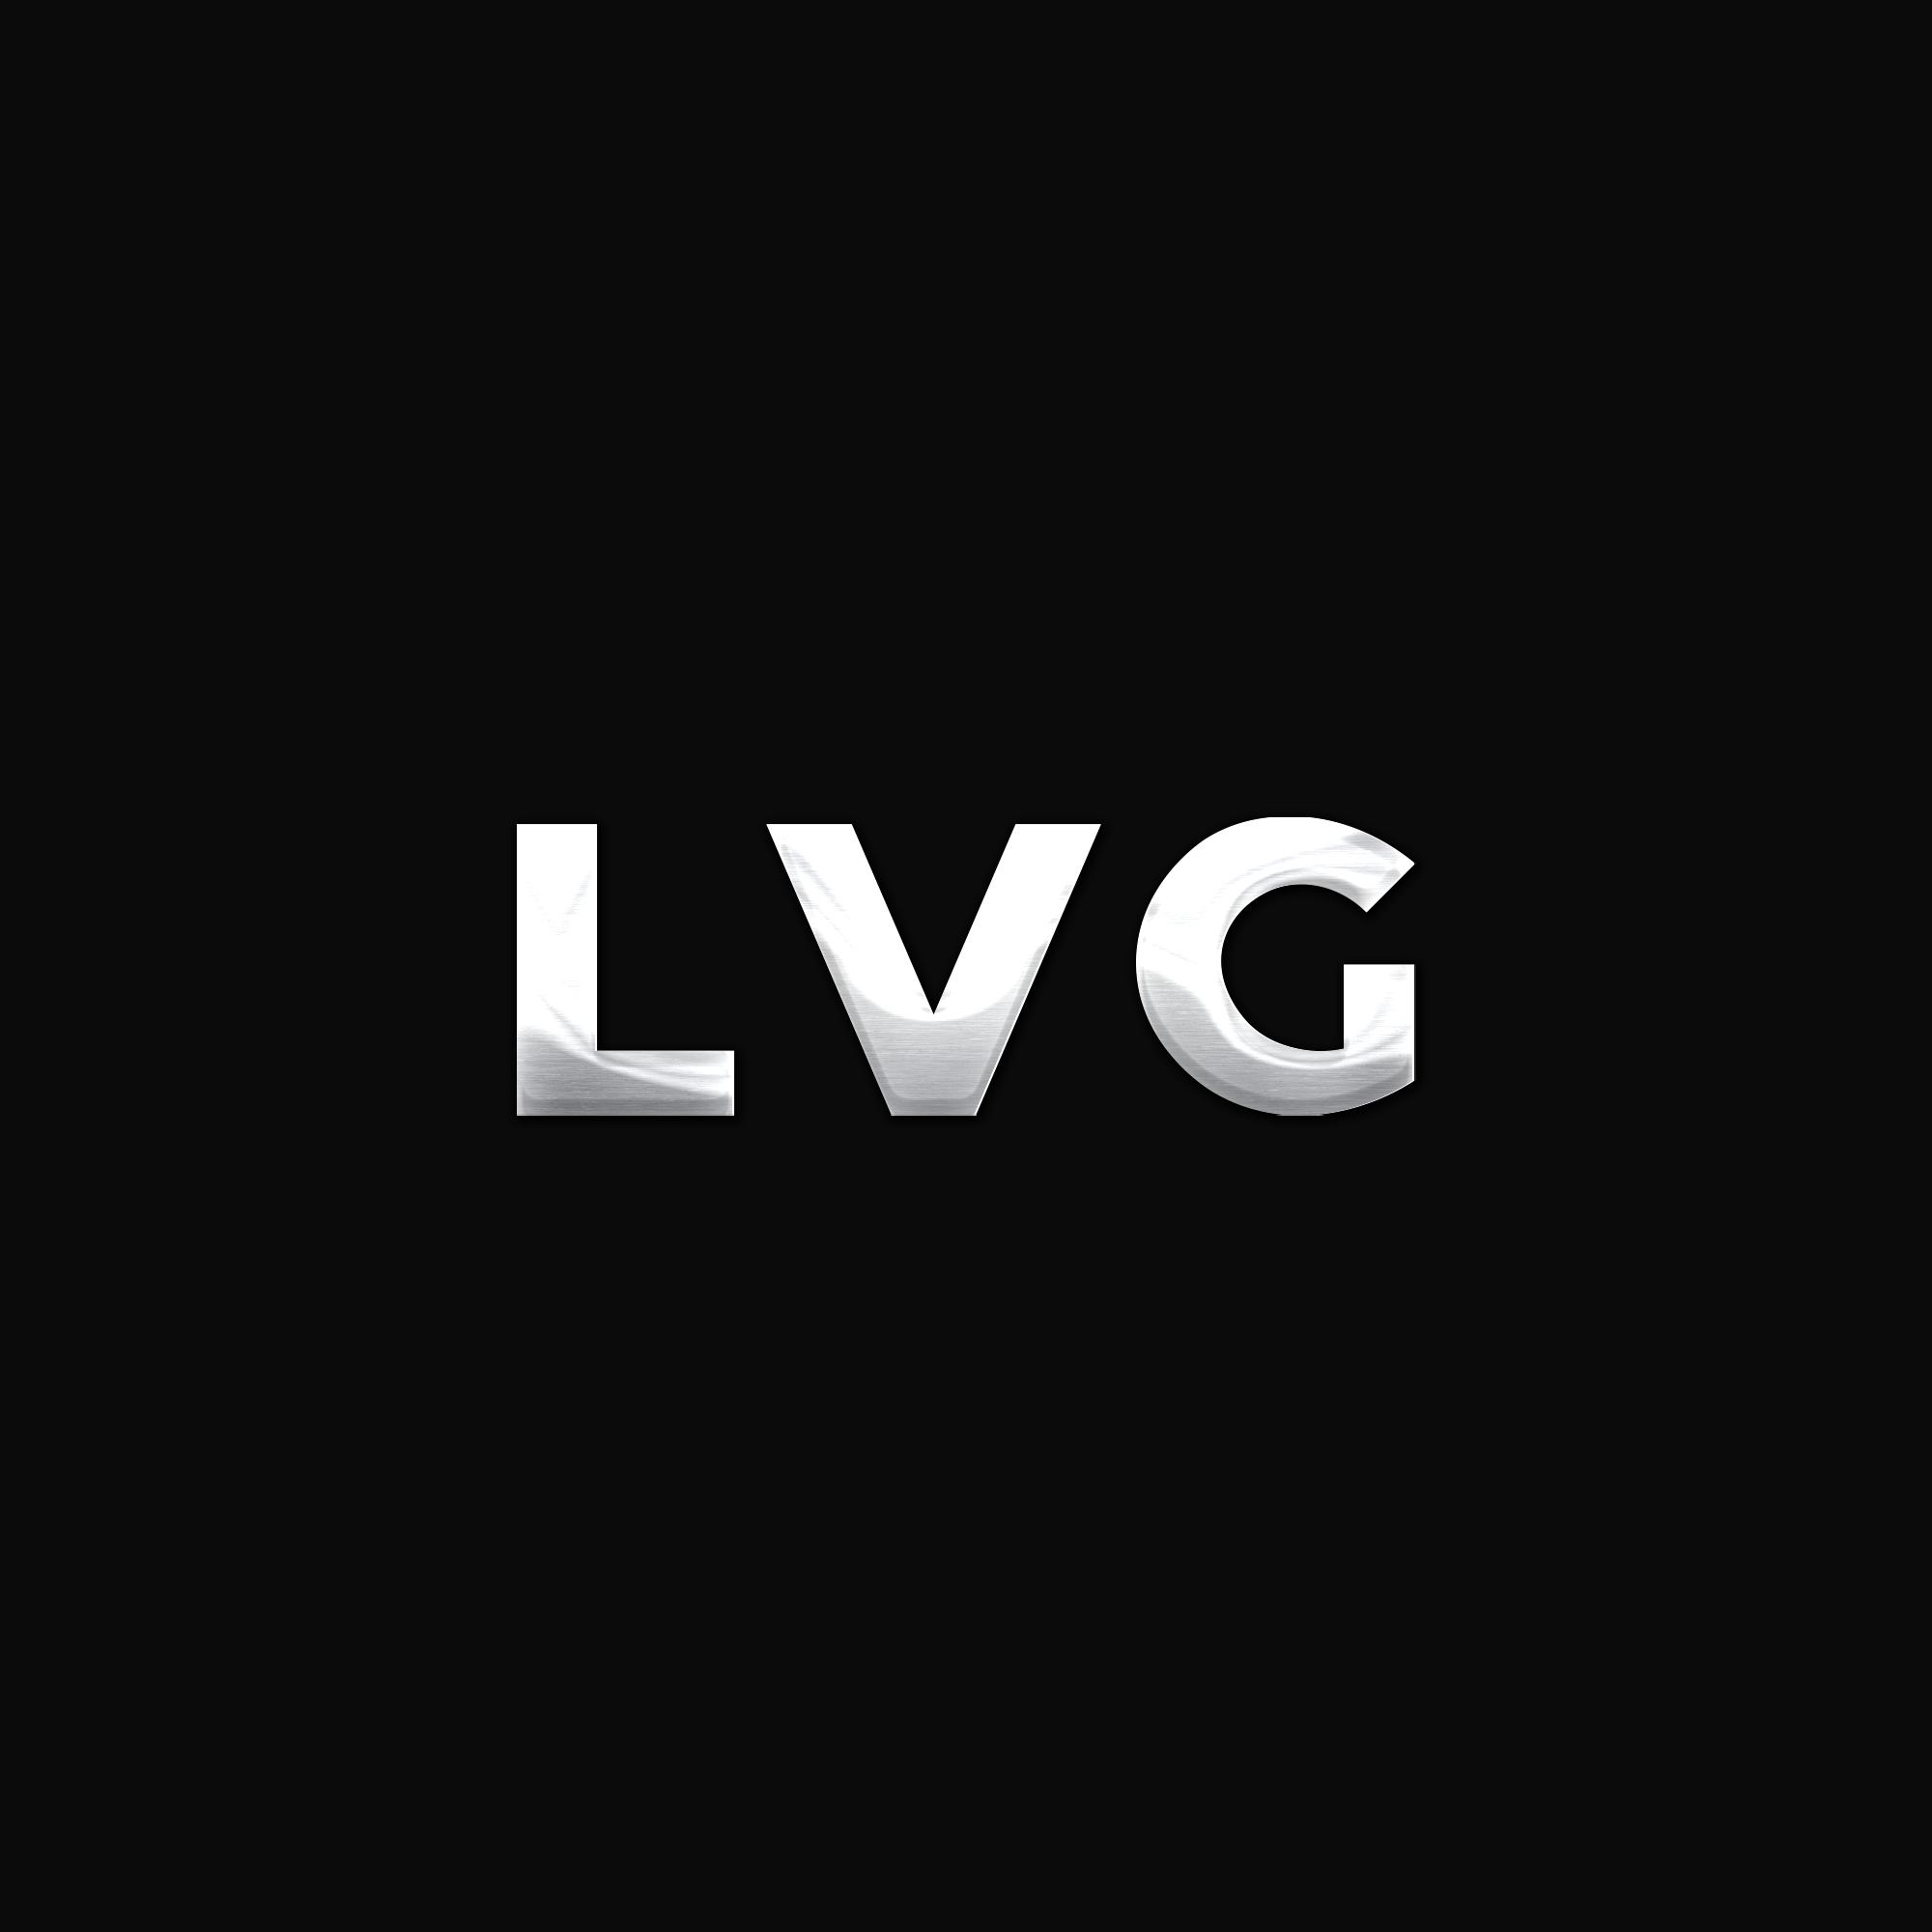 LVG eSports